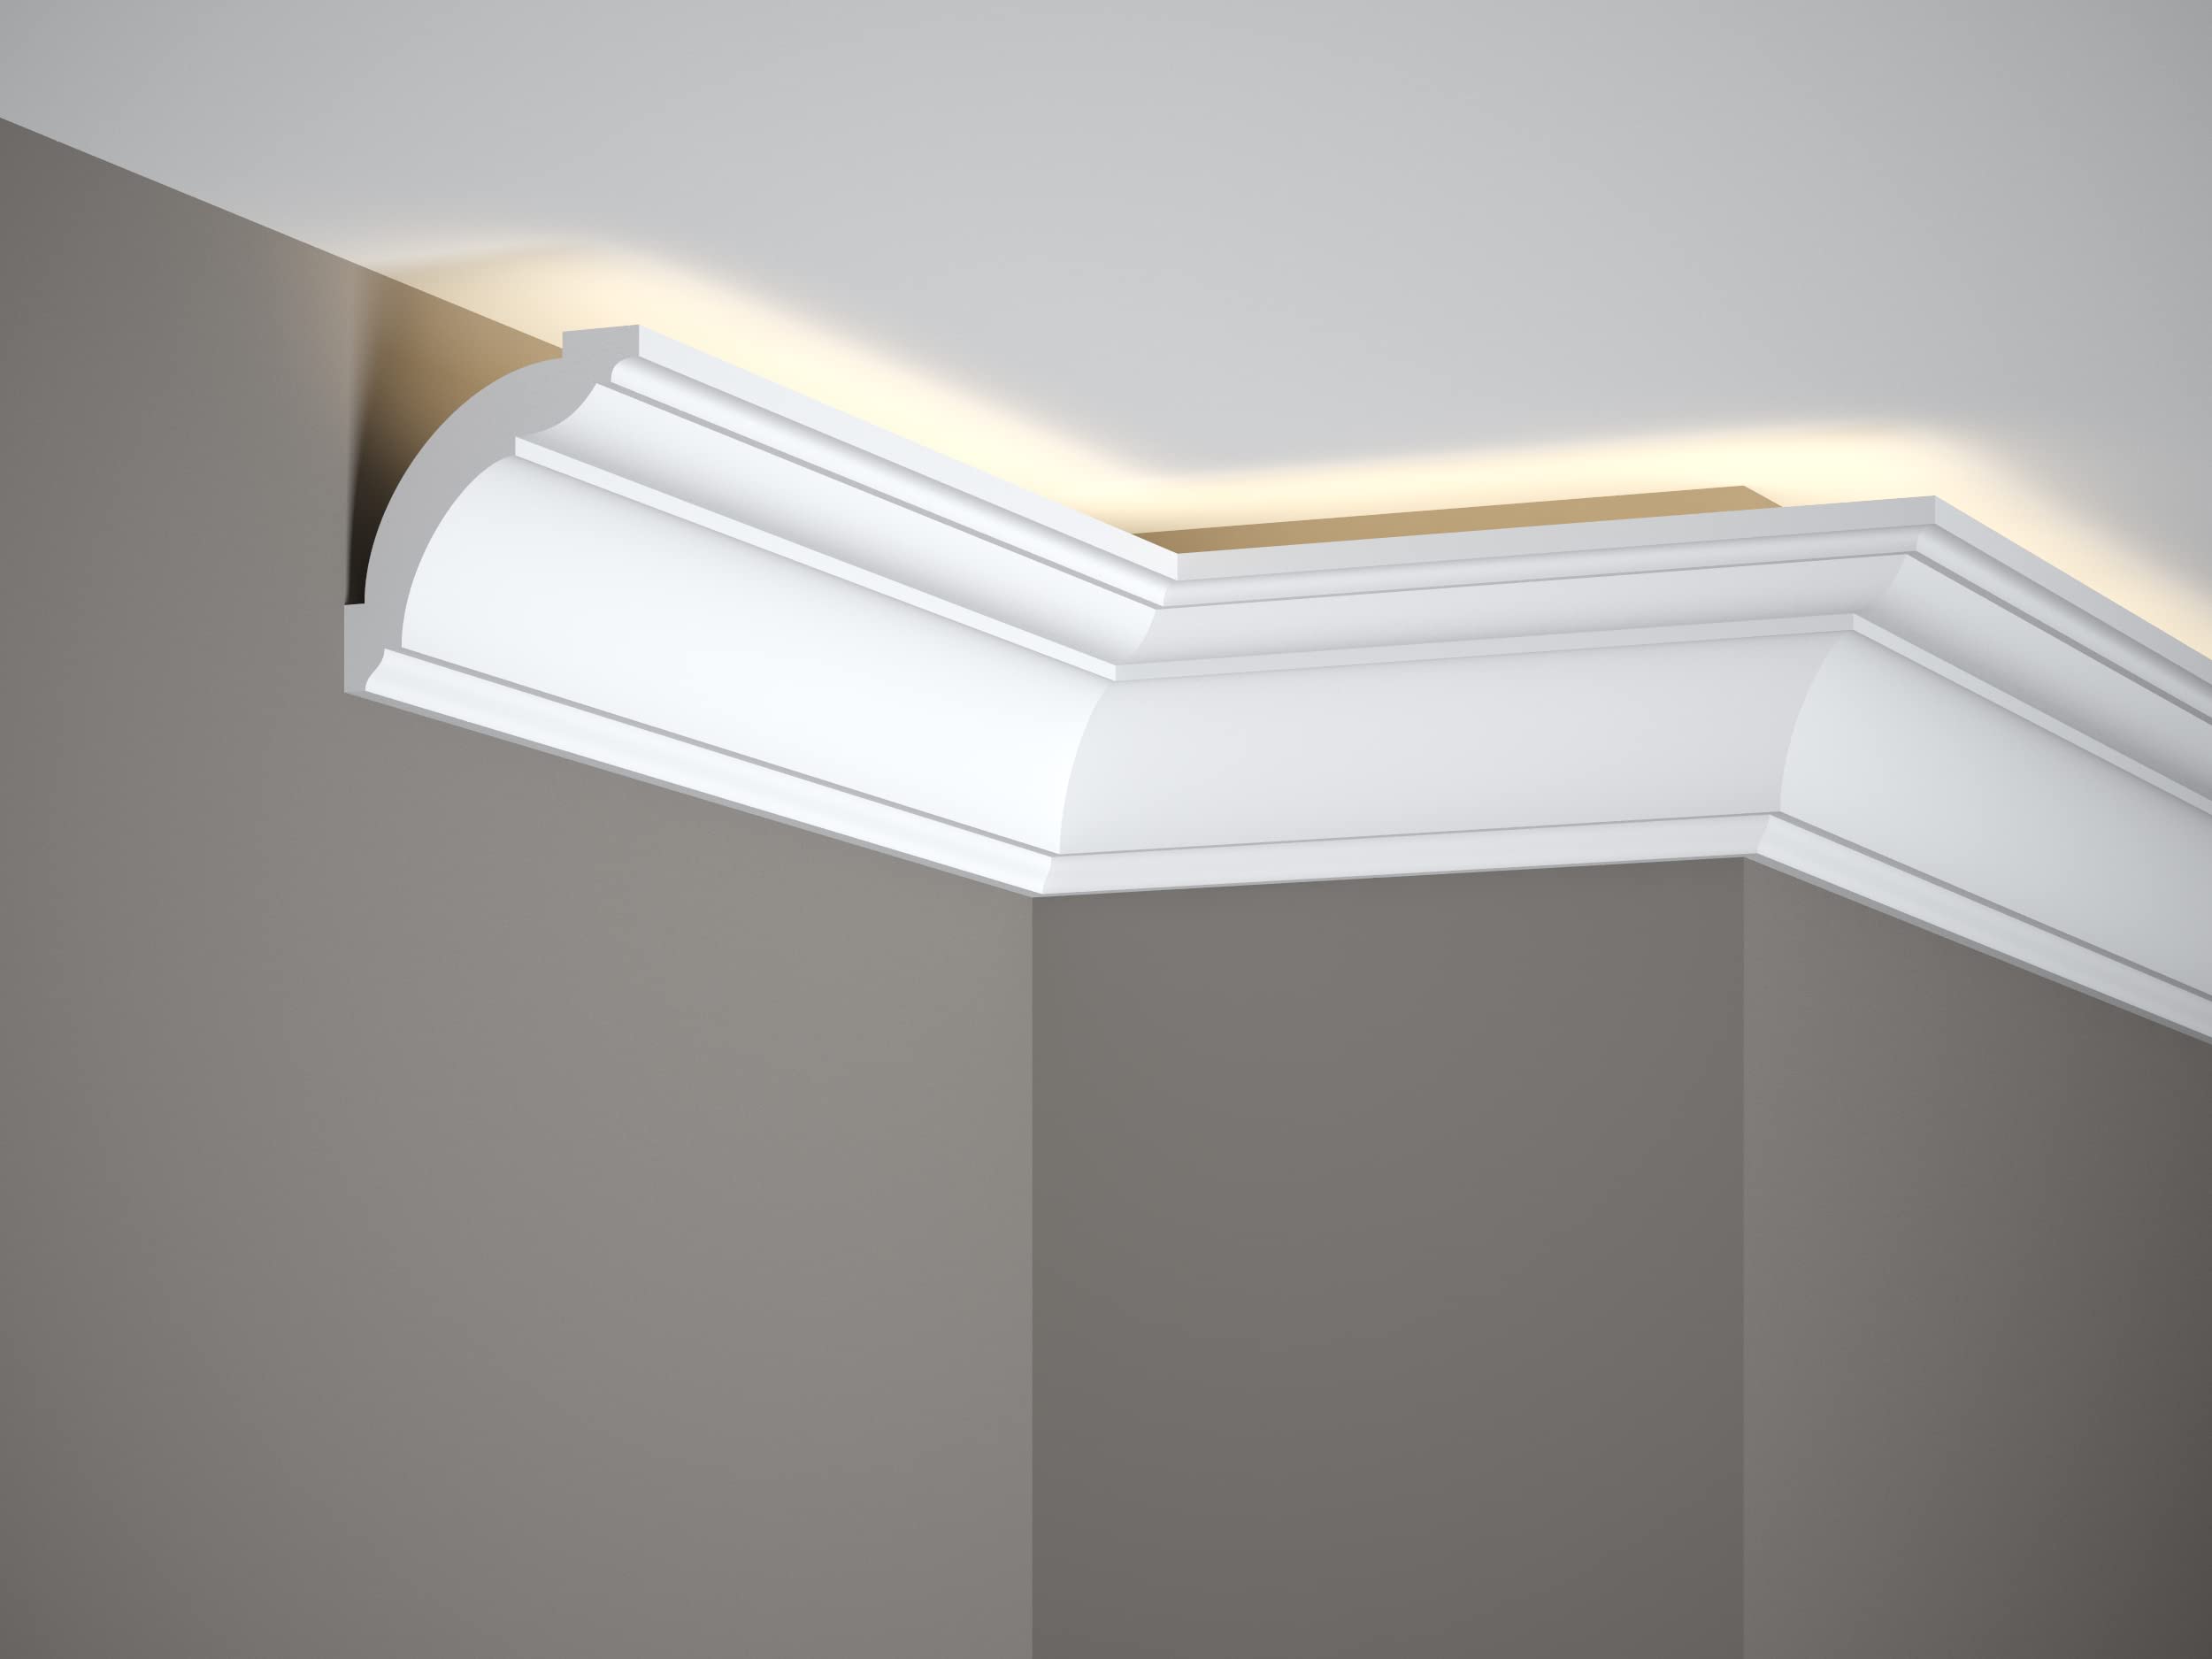 Mardom Decor MD367 Stucco Ceiling Strip for Indirect LED Lighting 200 cm x 7.2 cm x 7.0 cm